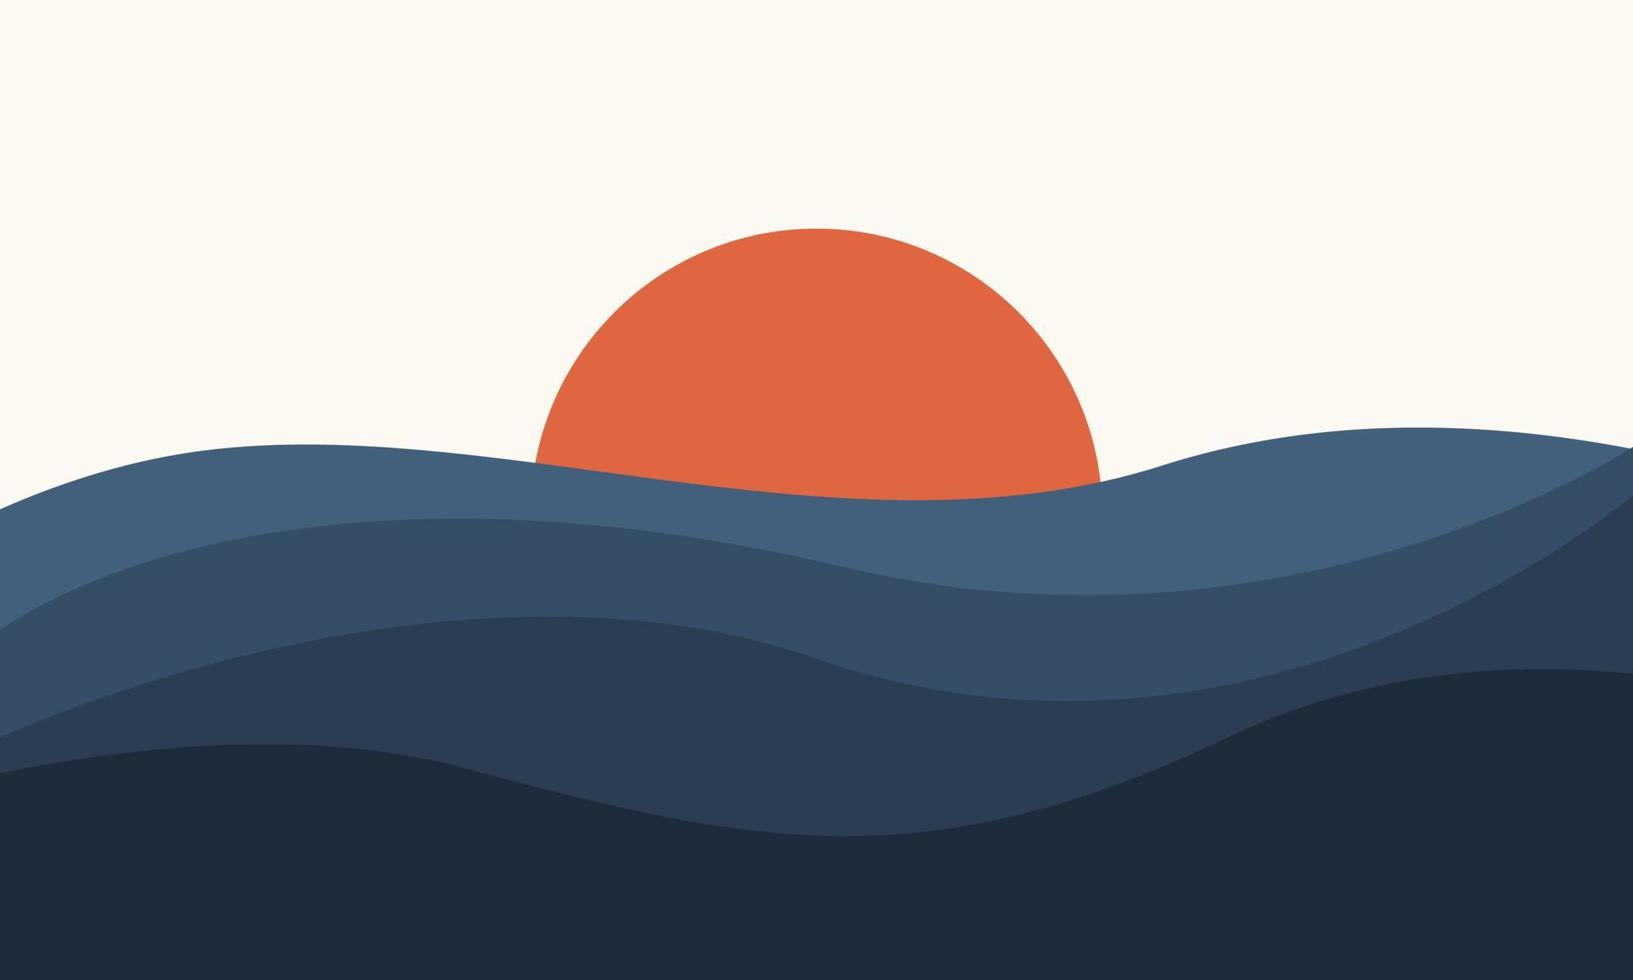 Abstract minimal modern landscape sunset illustration background vector